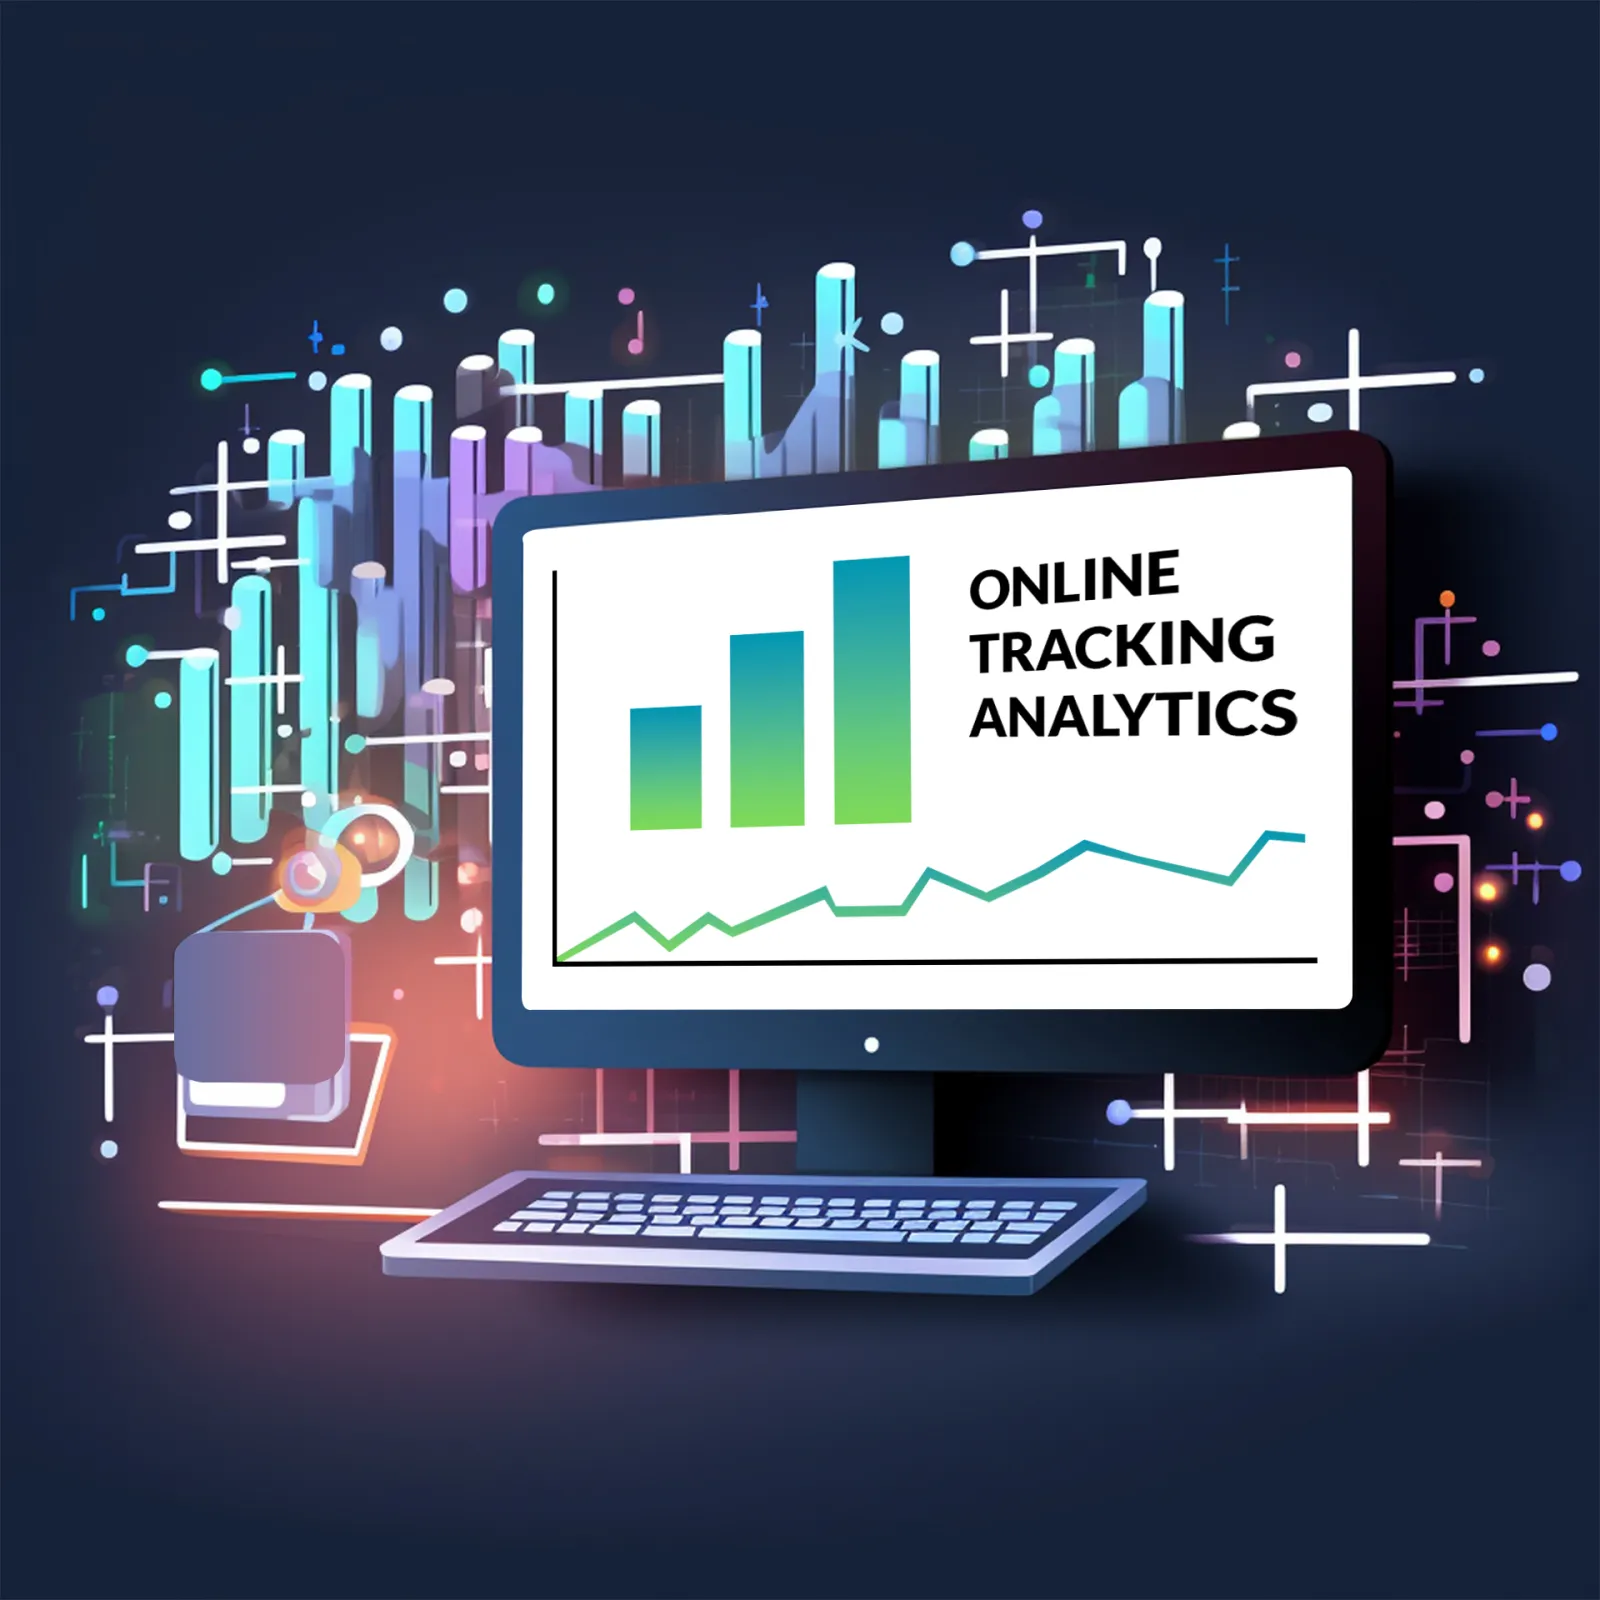 Online tracking analytics